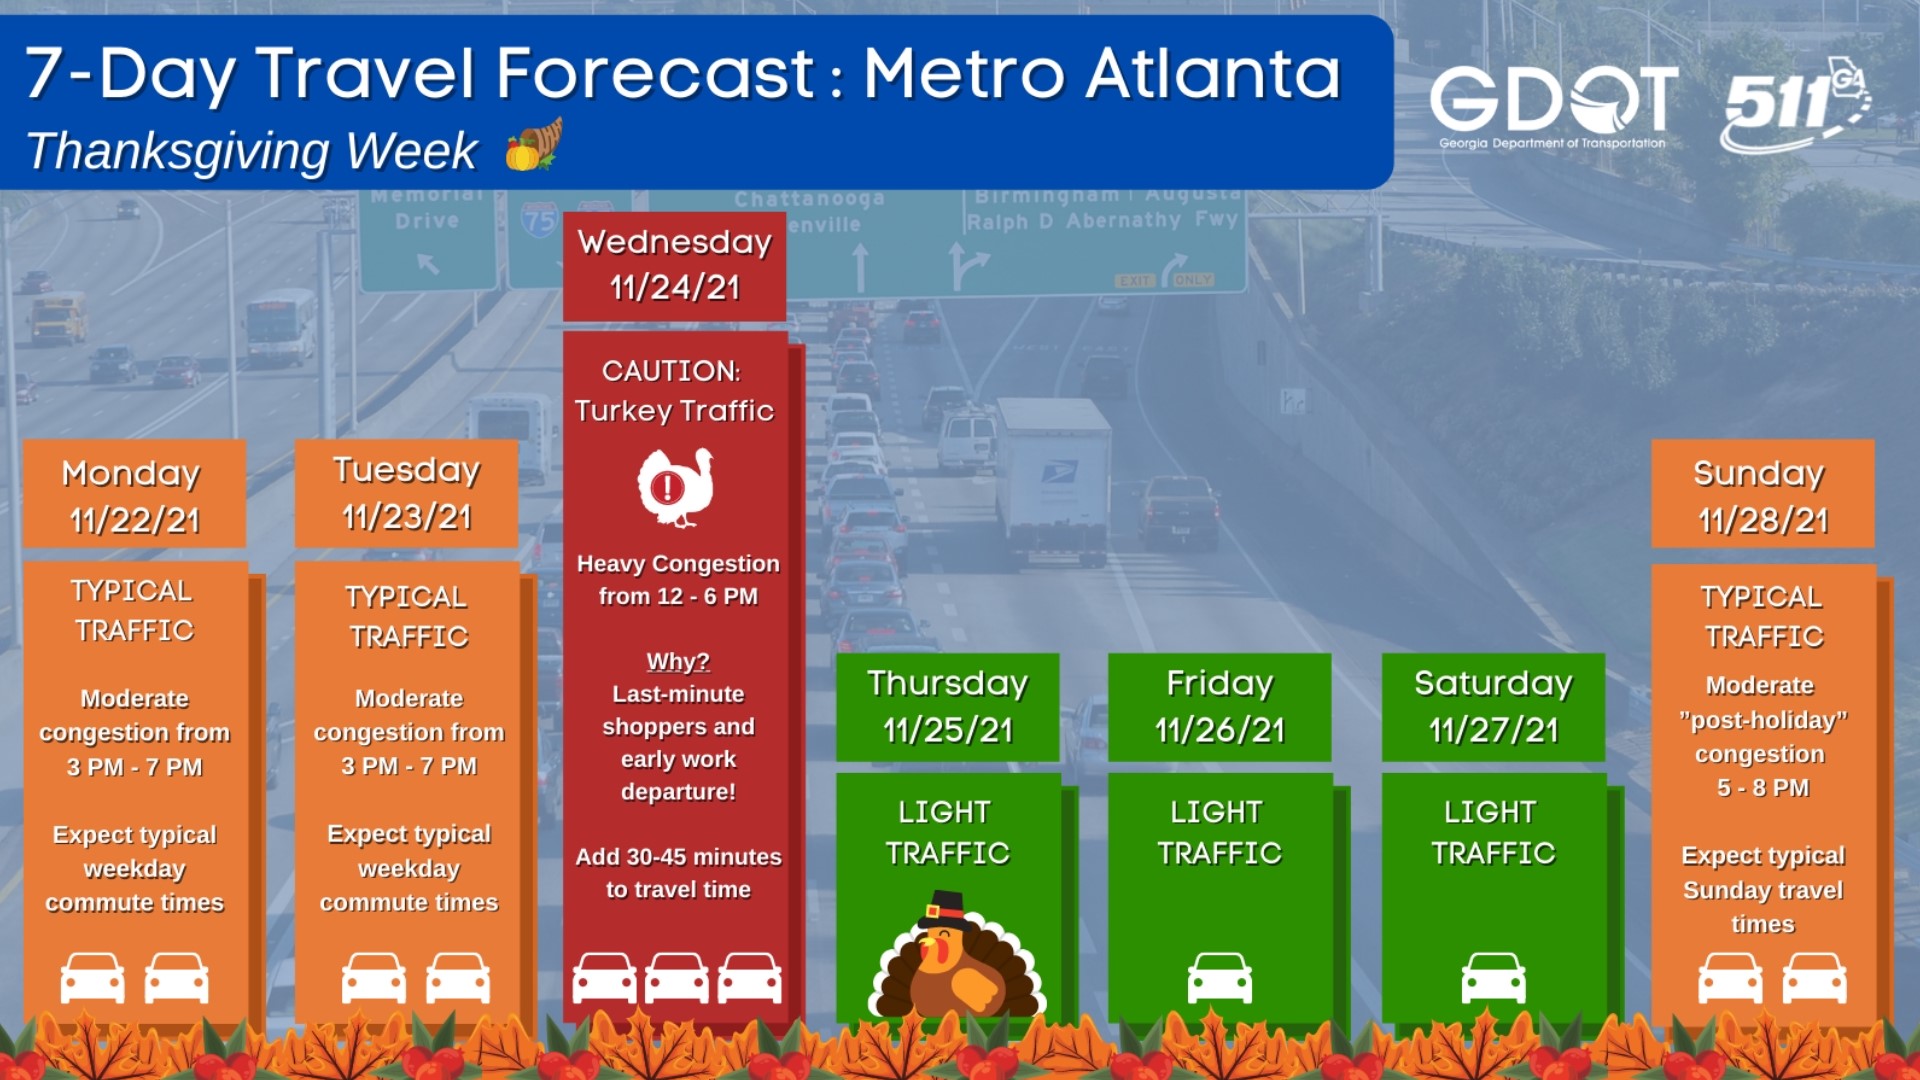 Atlanta traffic travel times for Thanksgiving